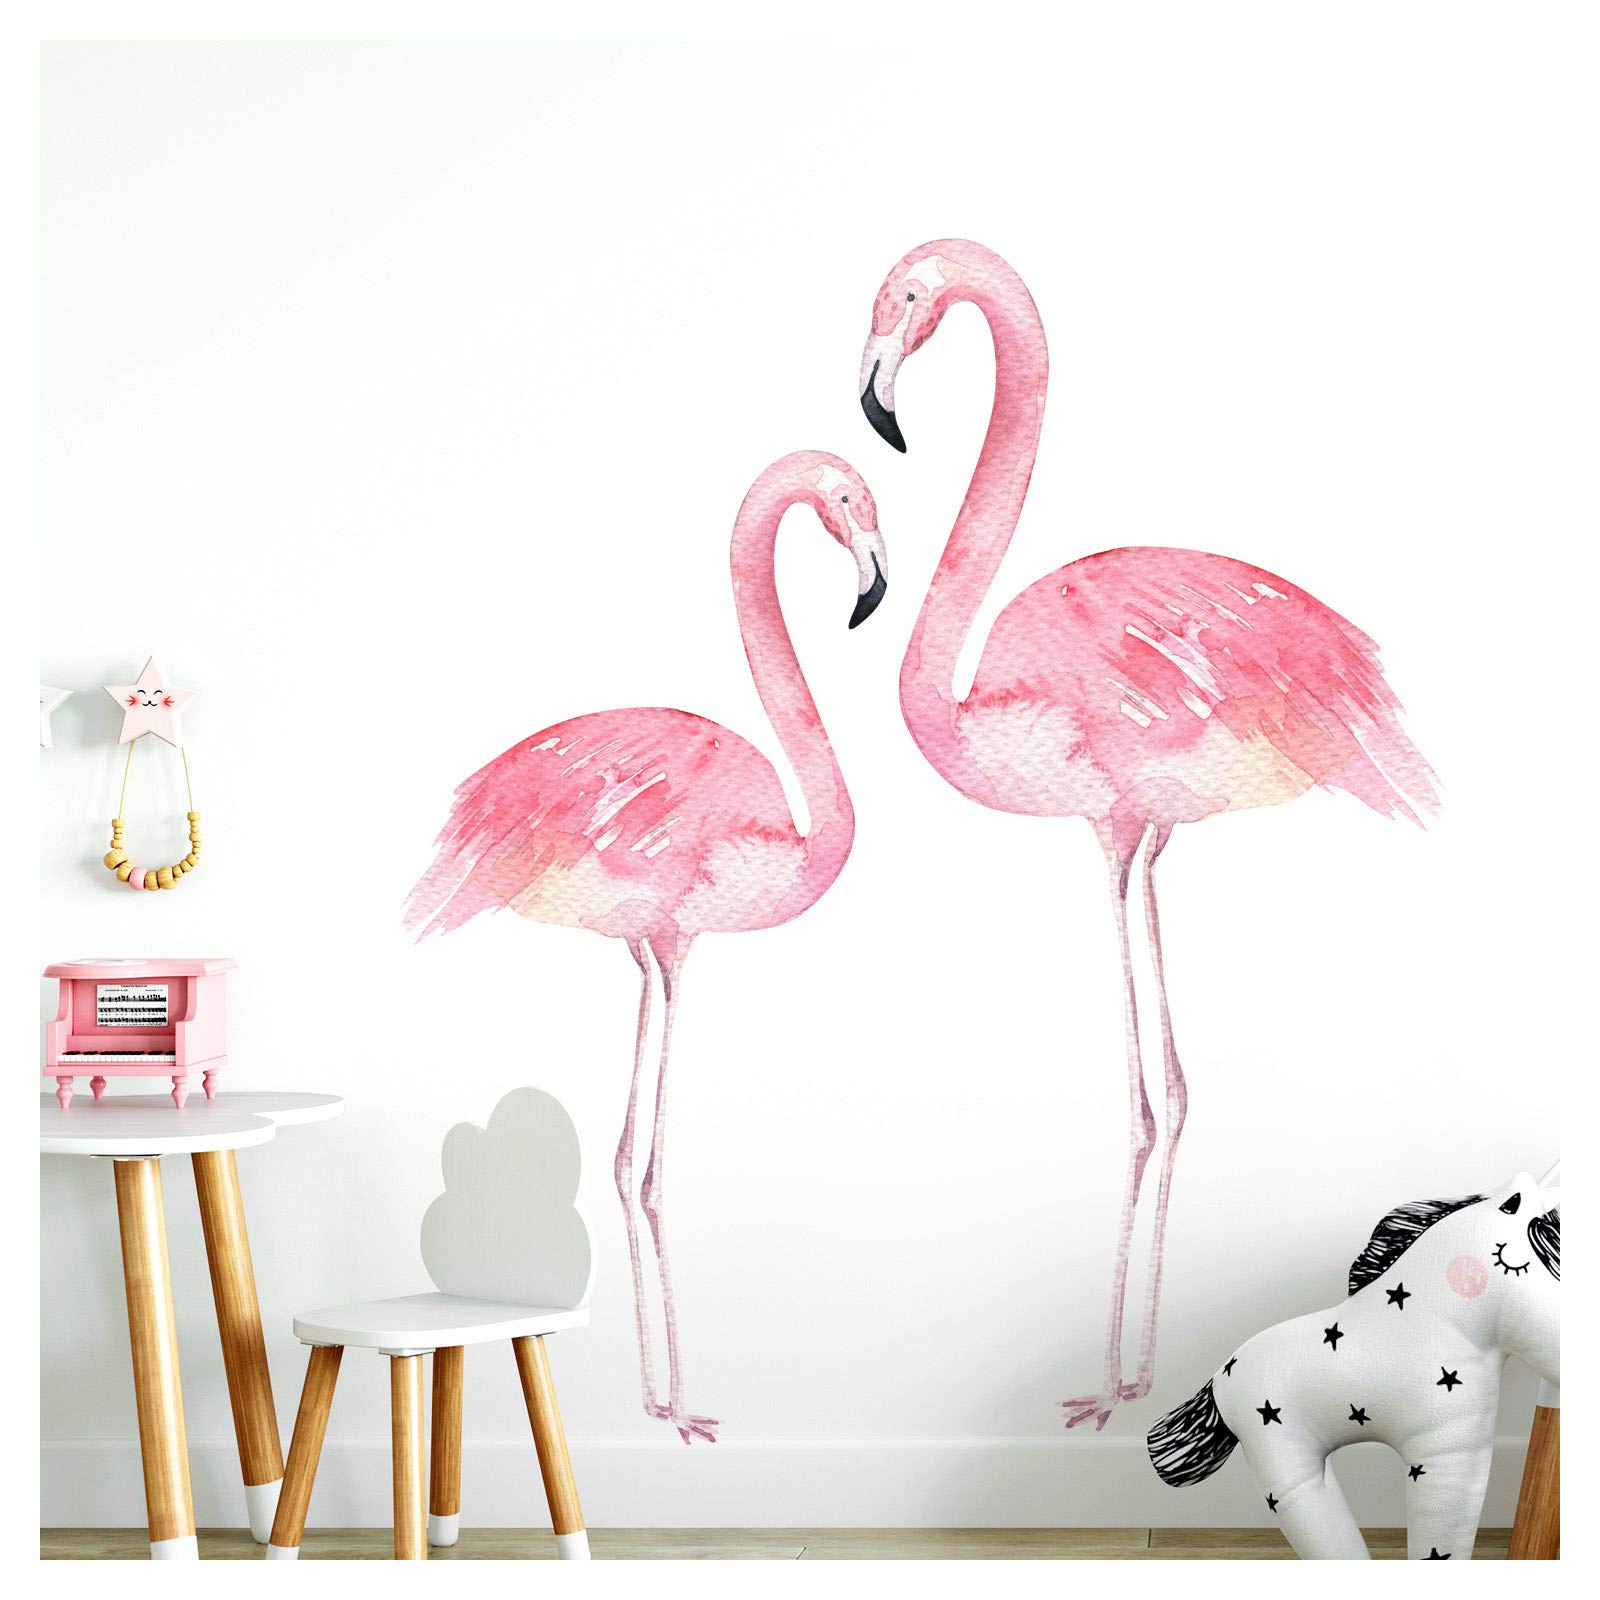 Little Deco Wandtattoo Flamingos I XL - 89 x 100 cm (BxH) I Kinderzimmer Babyzimmer Kinder Aufkleber Sticker Wandaufkleber Wandsticker Klebeposter Stickers DL154